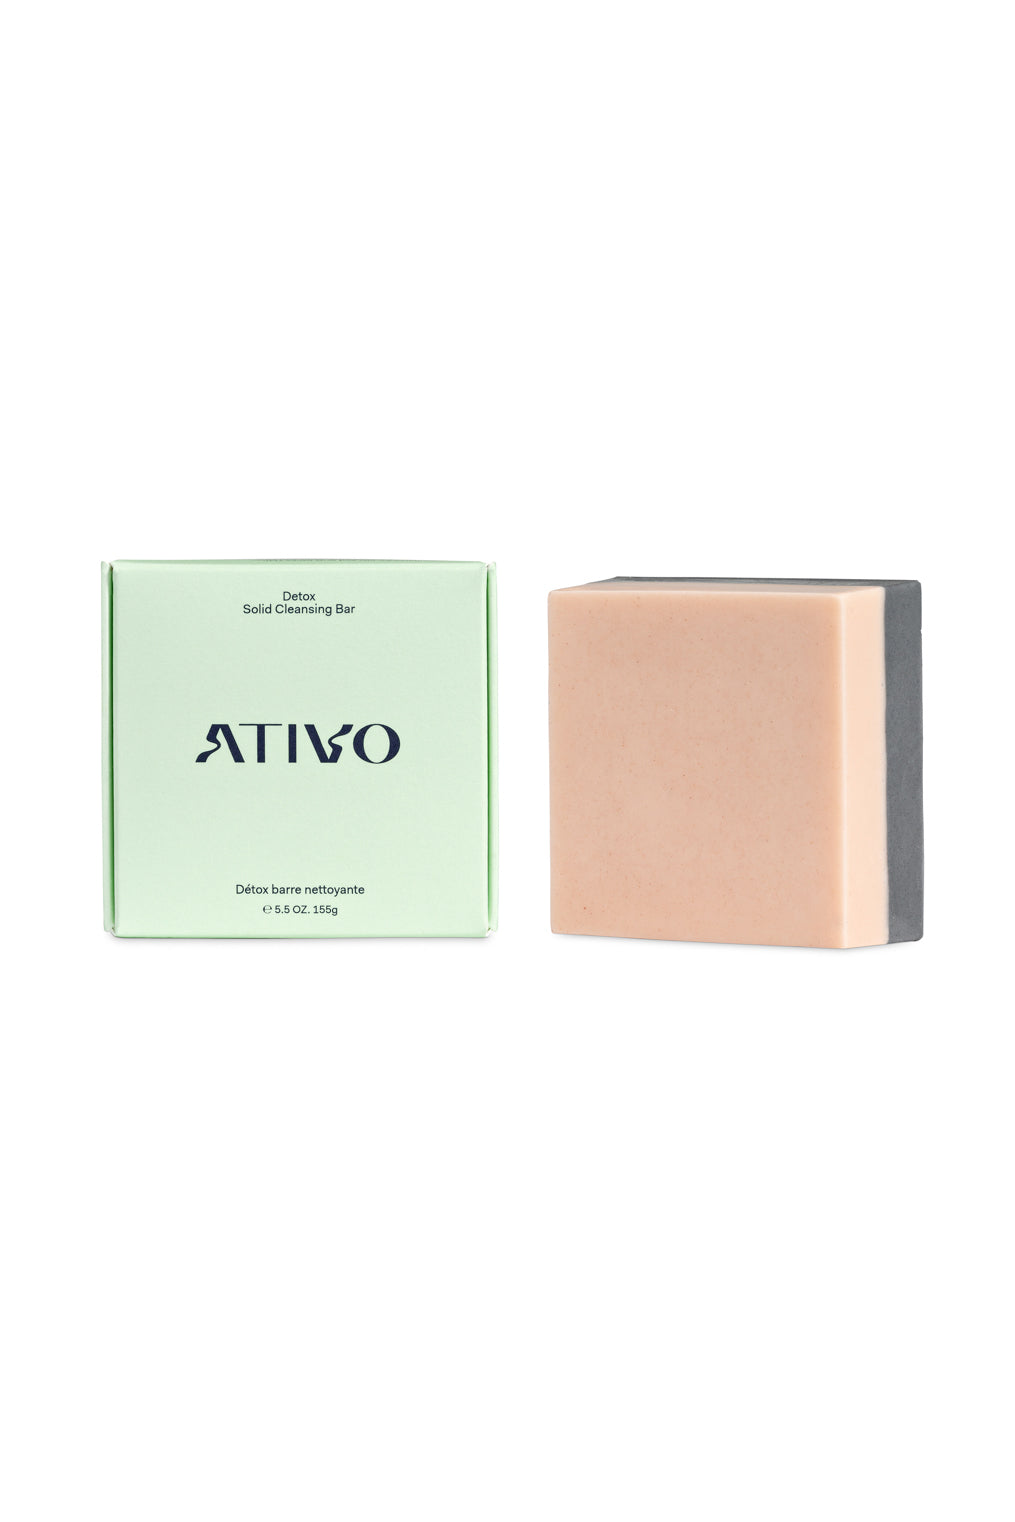 Ativo-Detox-Solid-Cleansing-Bar